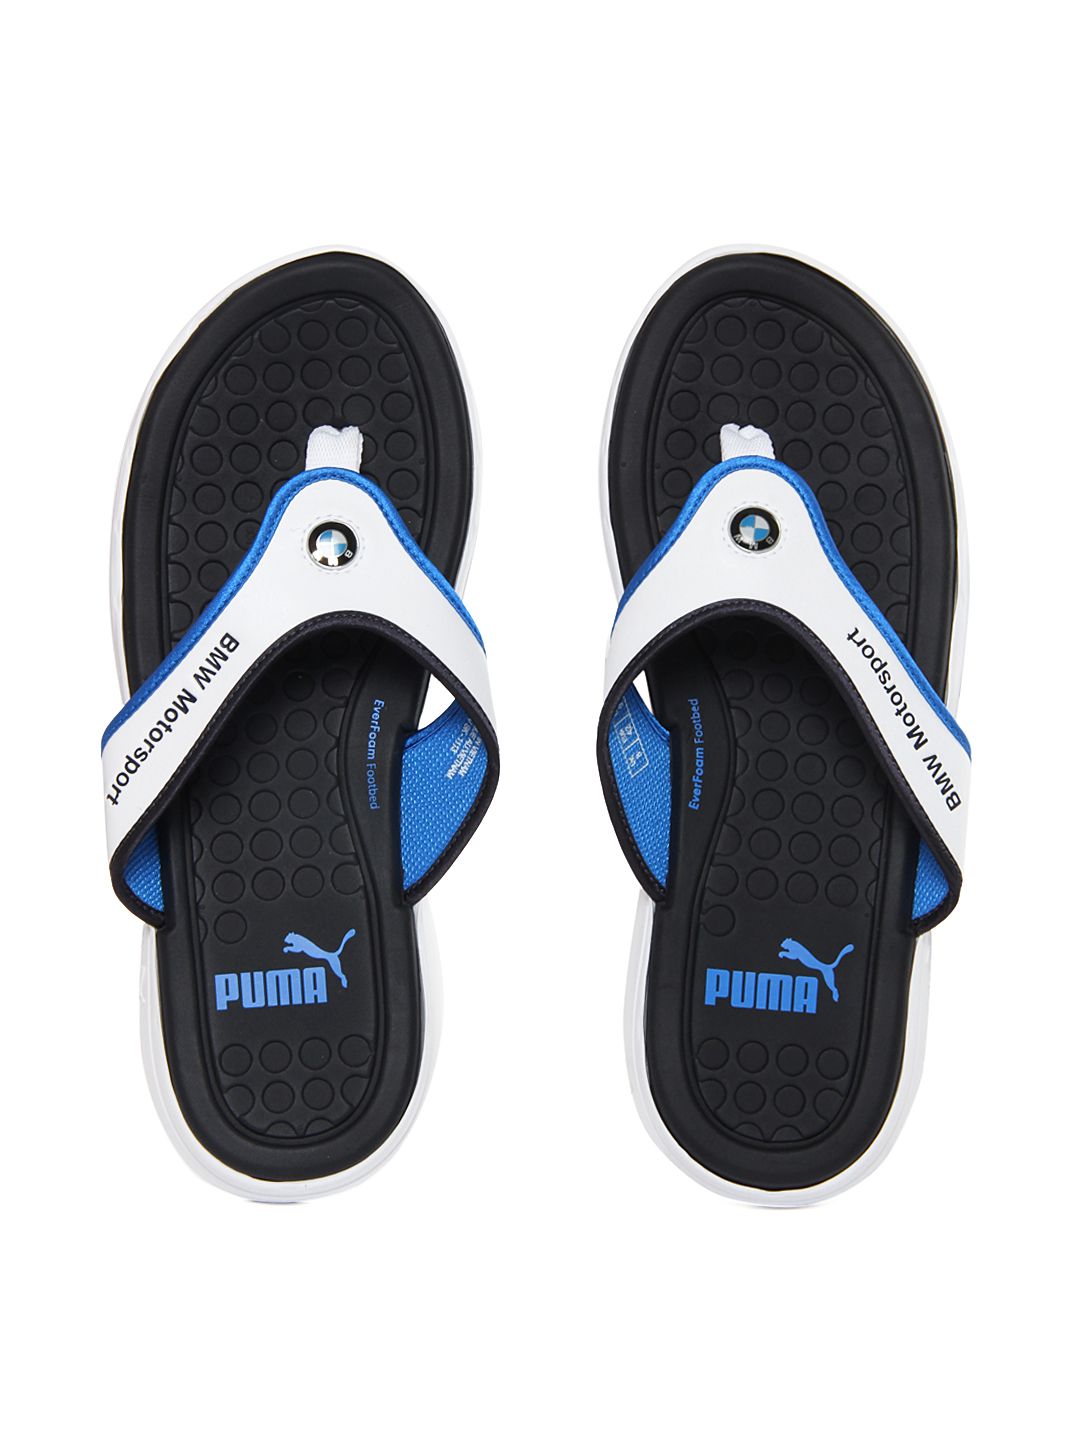 puma slipper online Sale,up to 52 